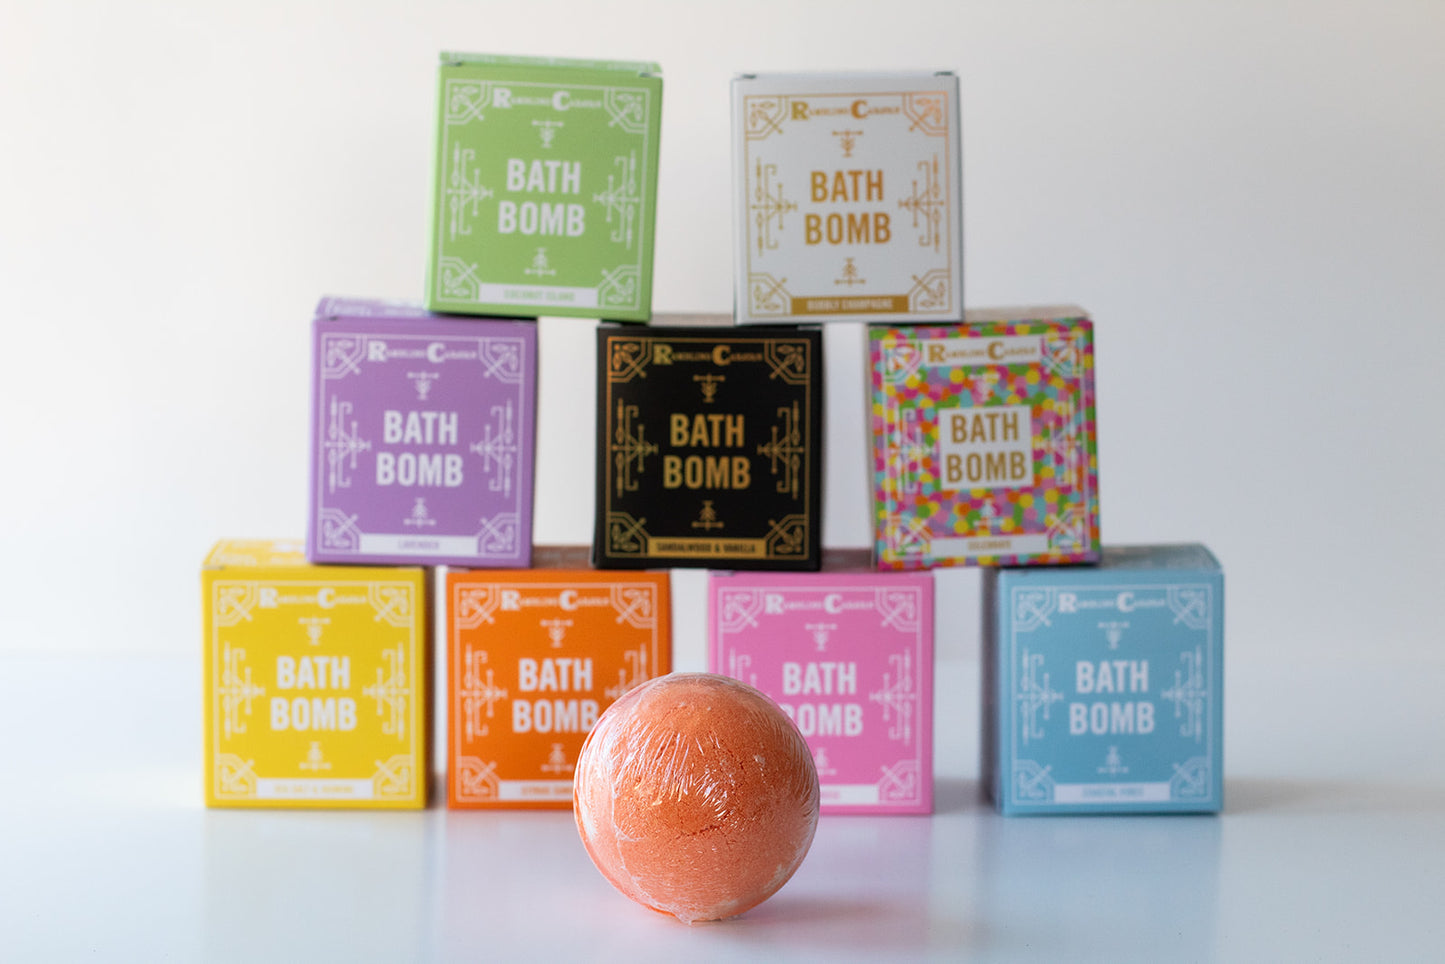 Bath Bomb - Citrus Sunshine